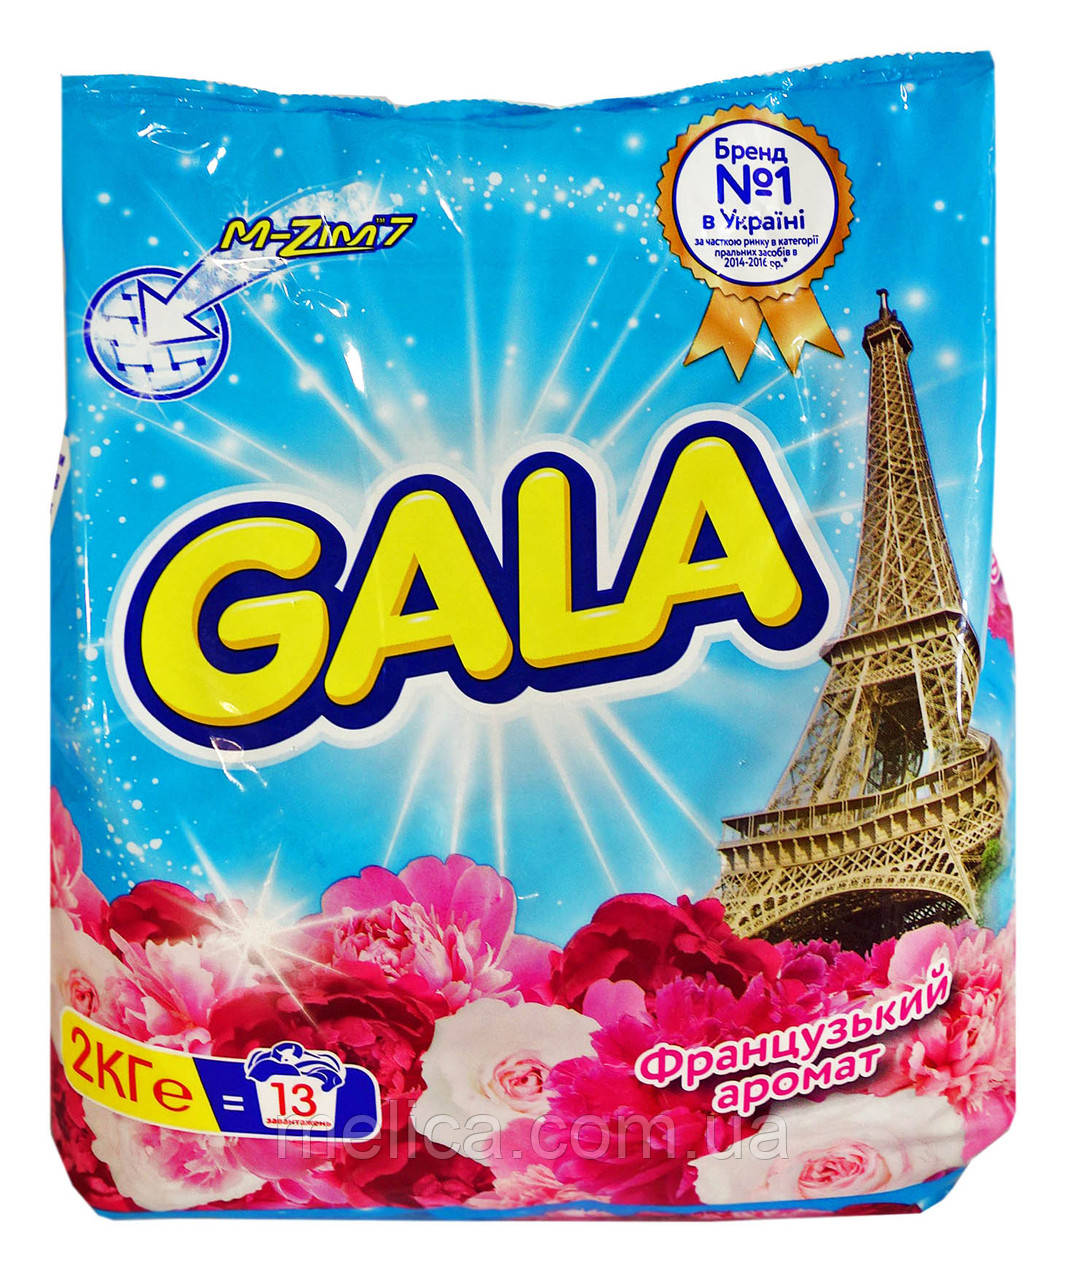 Порошок Gala Автомат Французький аромат - 2 кг.